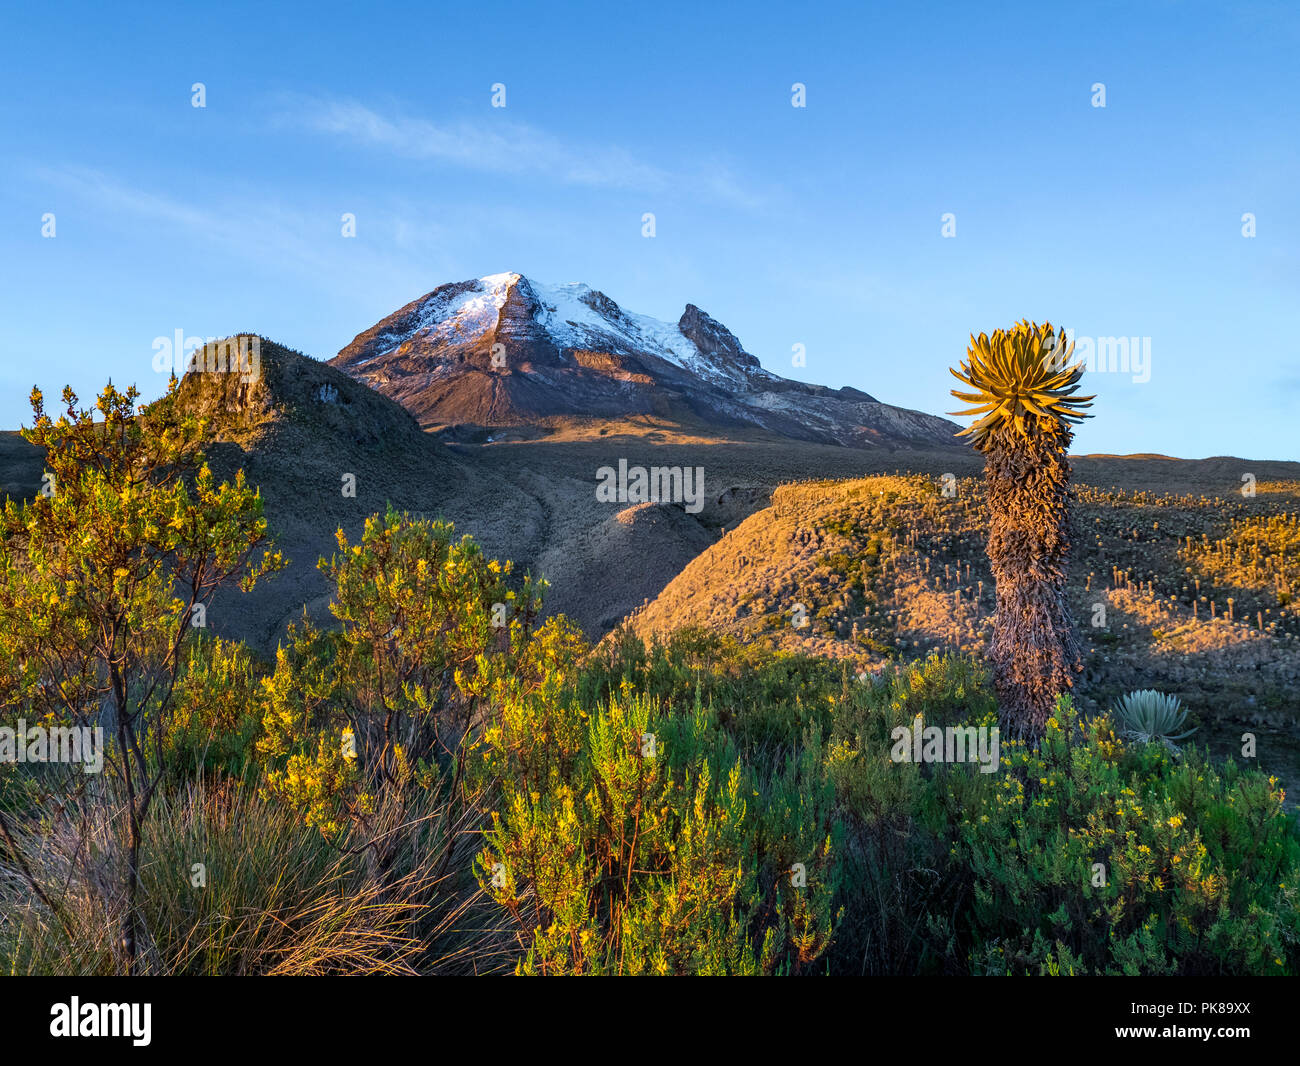 Volcano Tolima in Los Nevados National Park with beatyful vegetation frailejones (Espeletia), Colombia Stock Photo